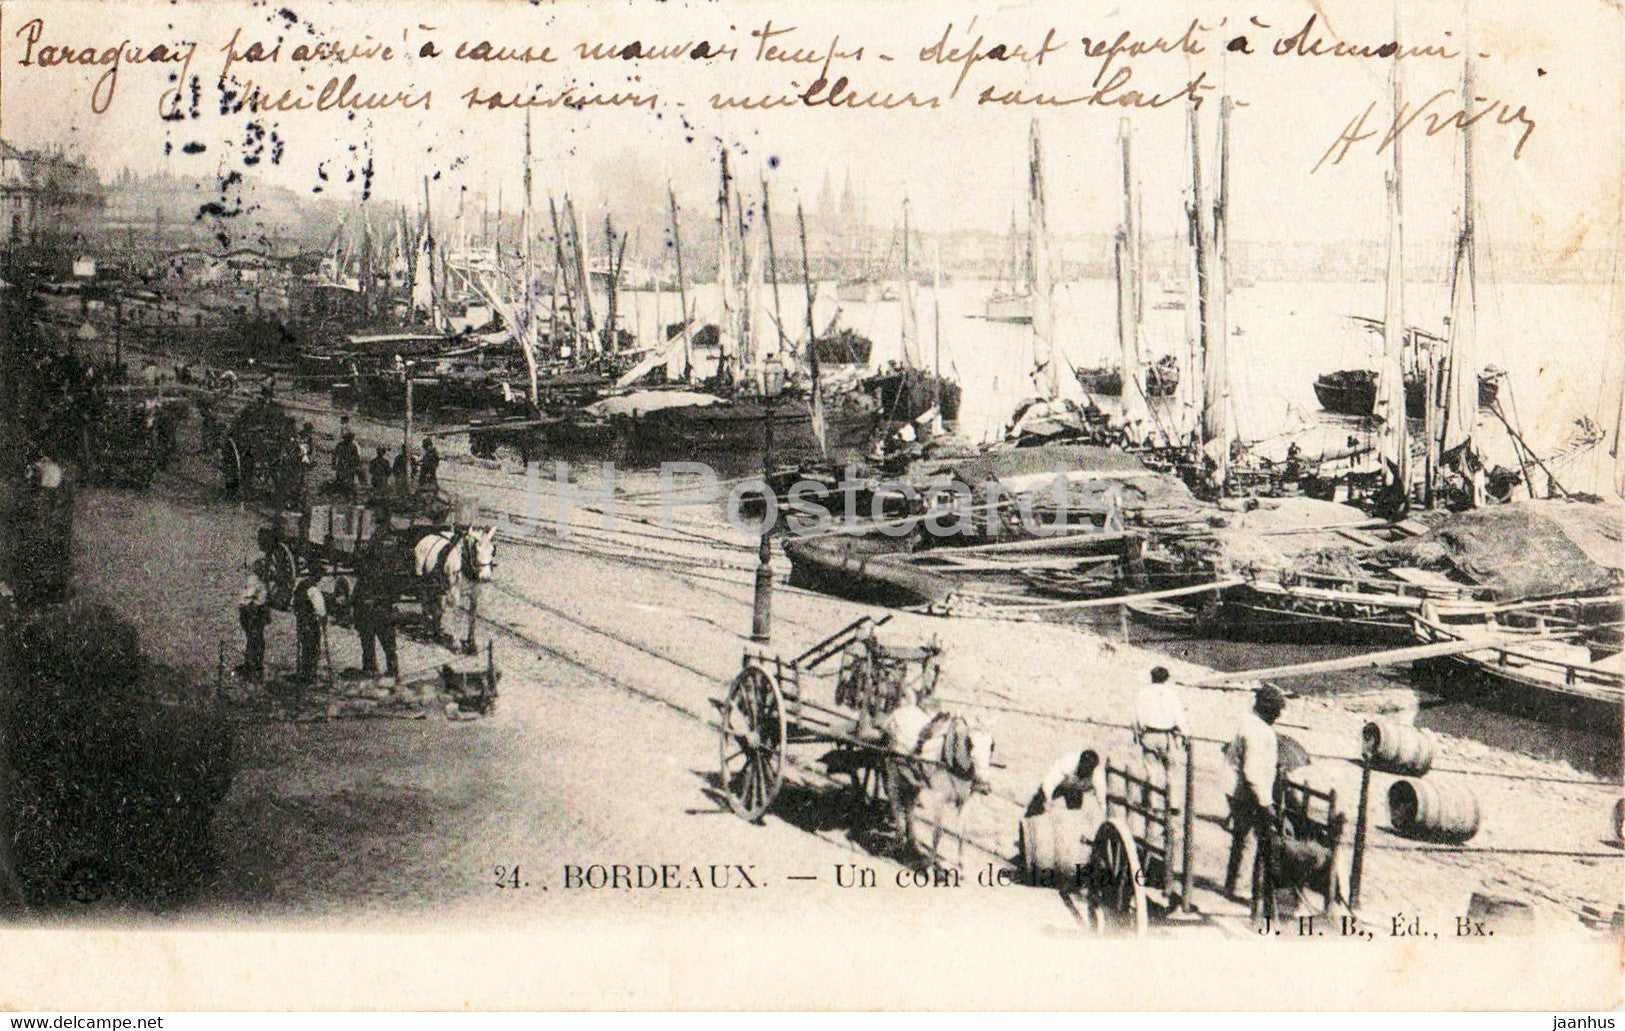 Bordeaux - Un coin de la Rade - sailing boat - ship - horse carriage - 24 - old postcard - 1904 - France - used - JH Postcards